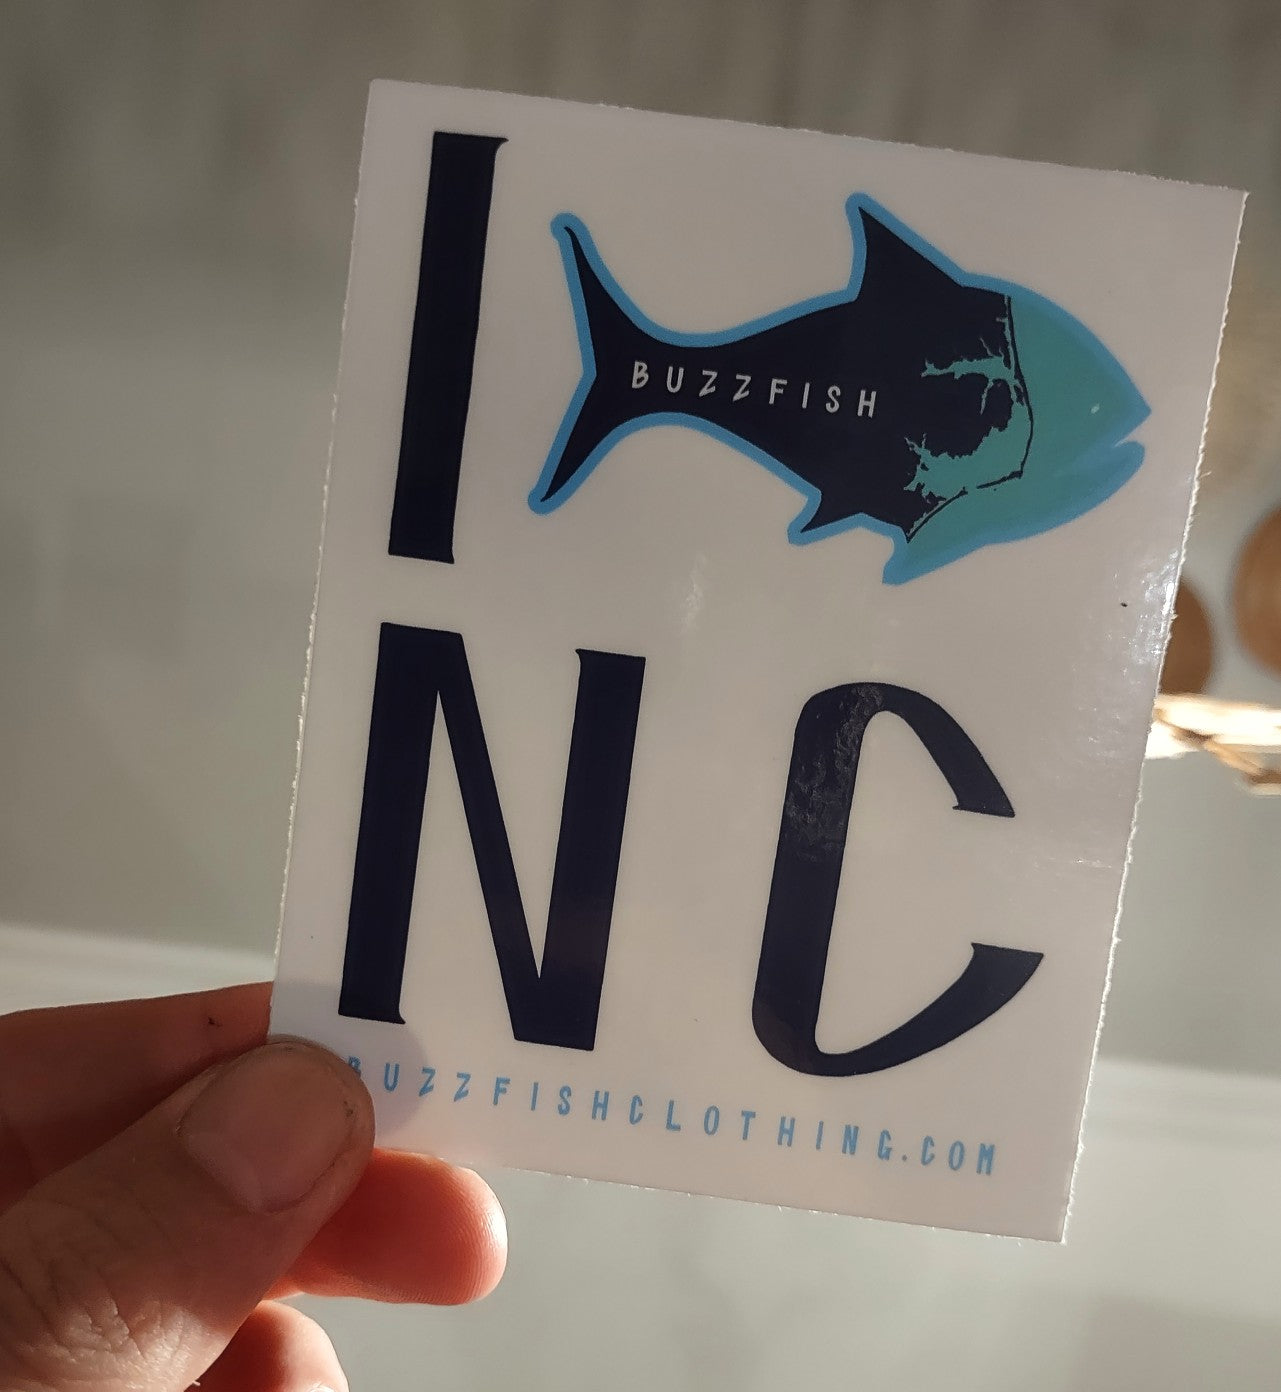 4 in. 'I Buzzfish NC' sticker